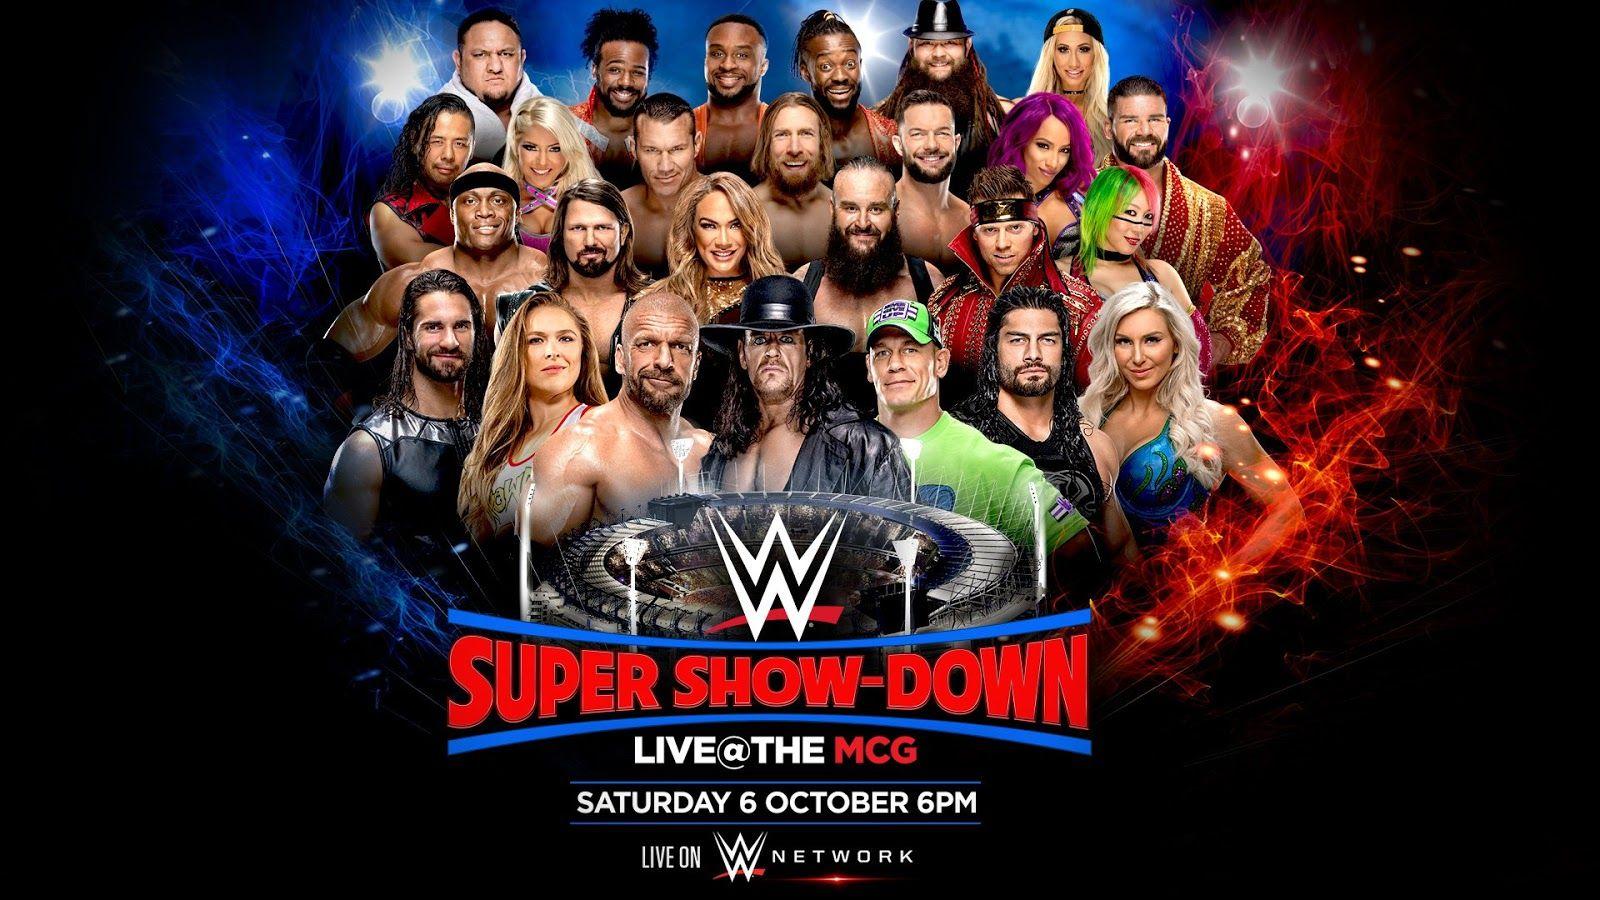 WWE Super Show Down Expensive Tickets Talk, Rey Mysterio 2K19